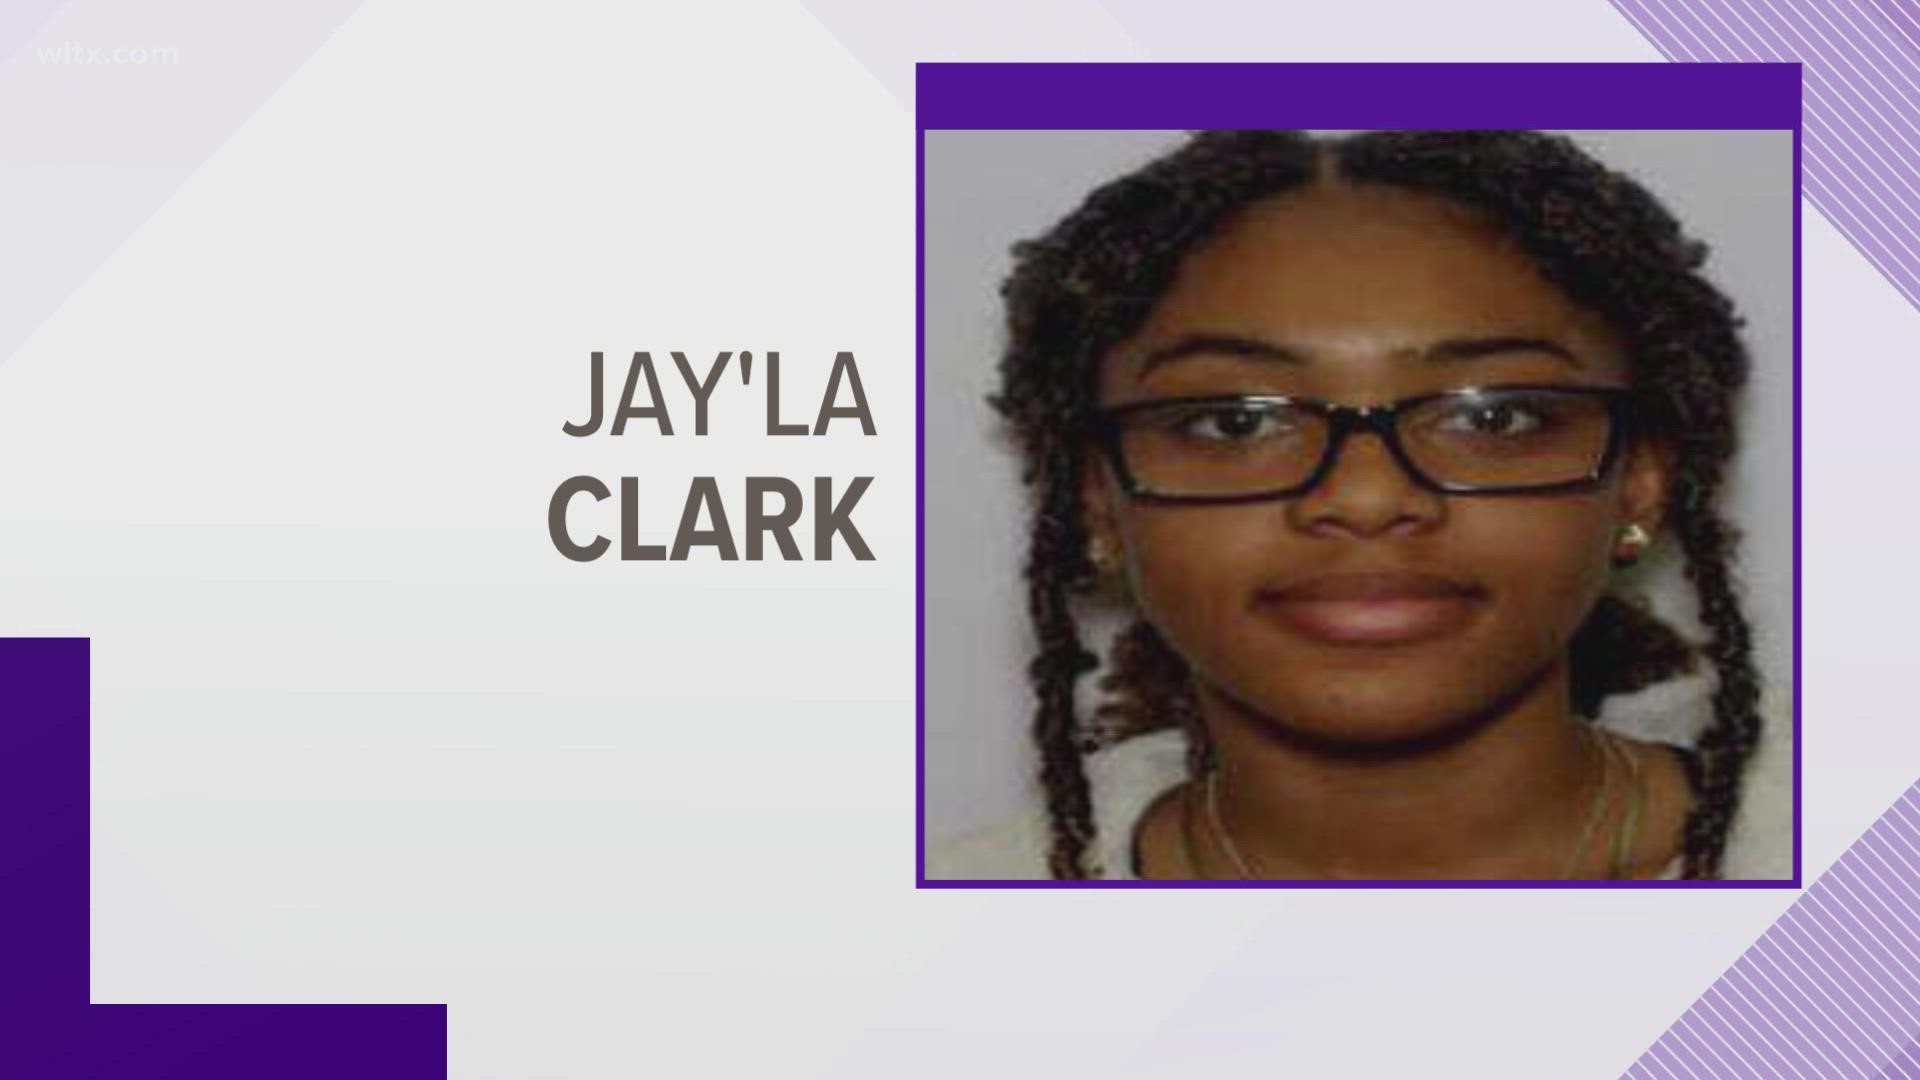 Jay'la Clark, 17, was last seen at River Bluff High School.